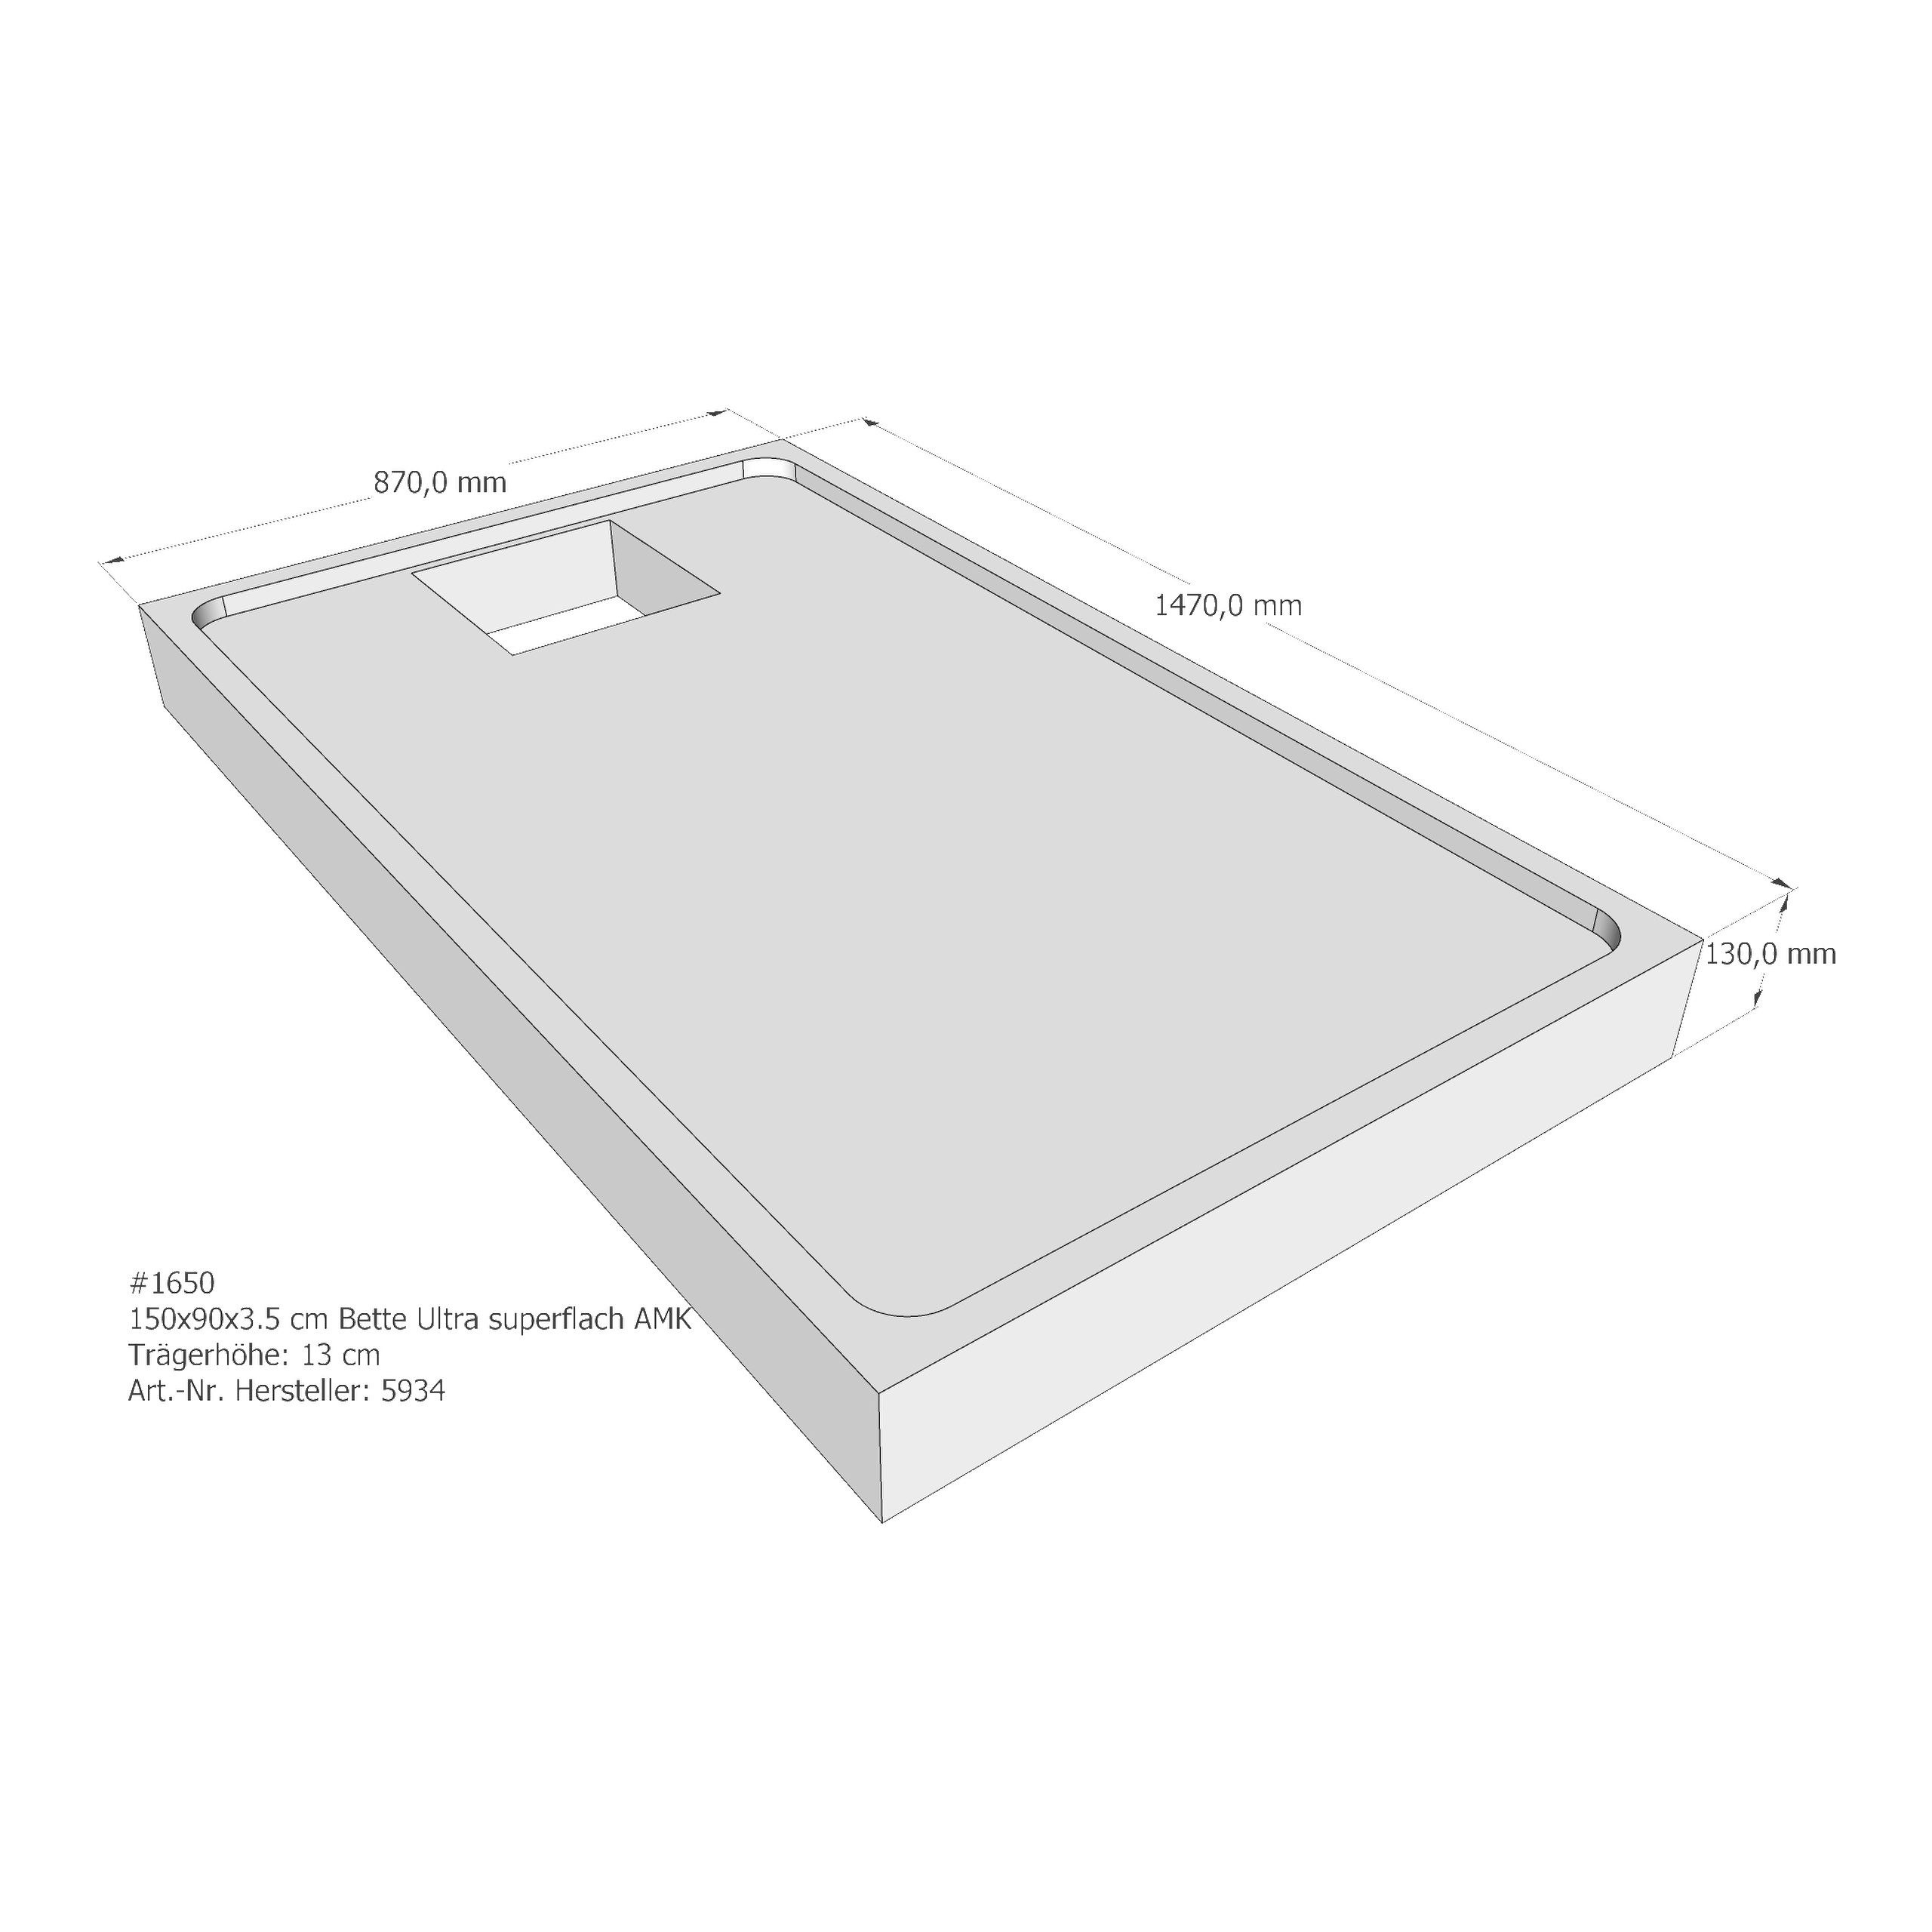 Duschwannenträger für Bette BetteUltra (superflach) 150 × 90 × 3,5 cm